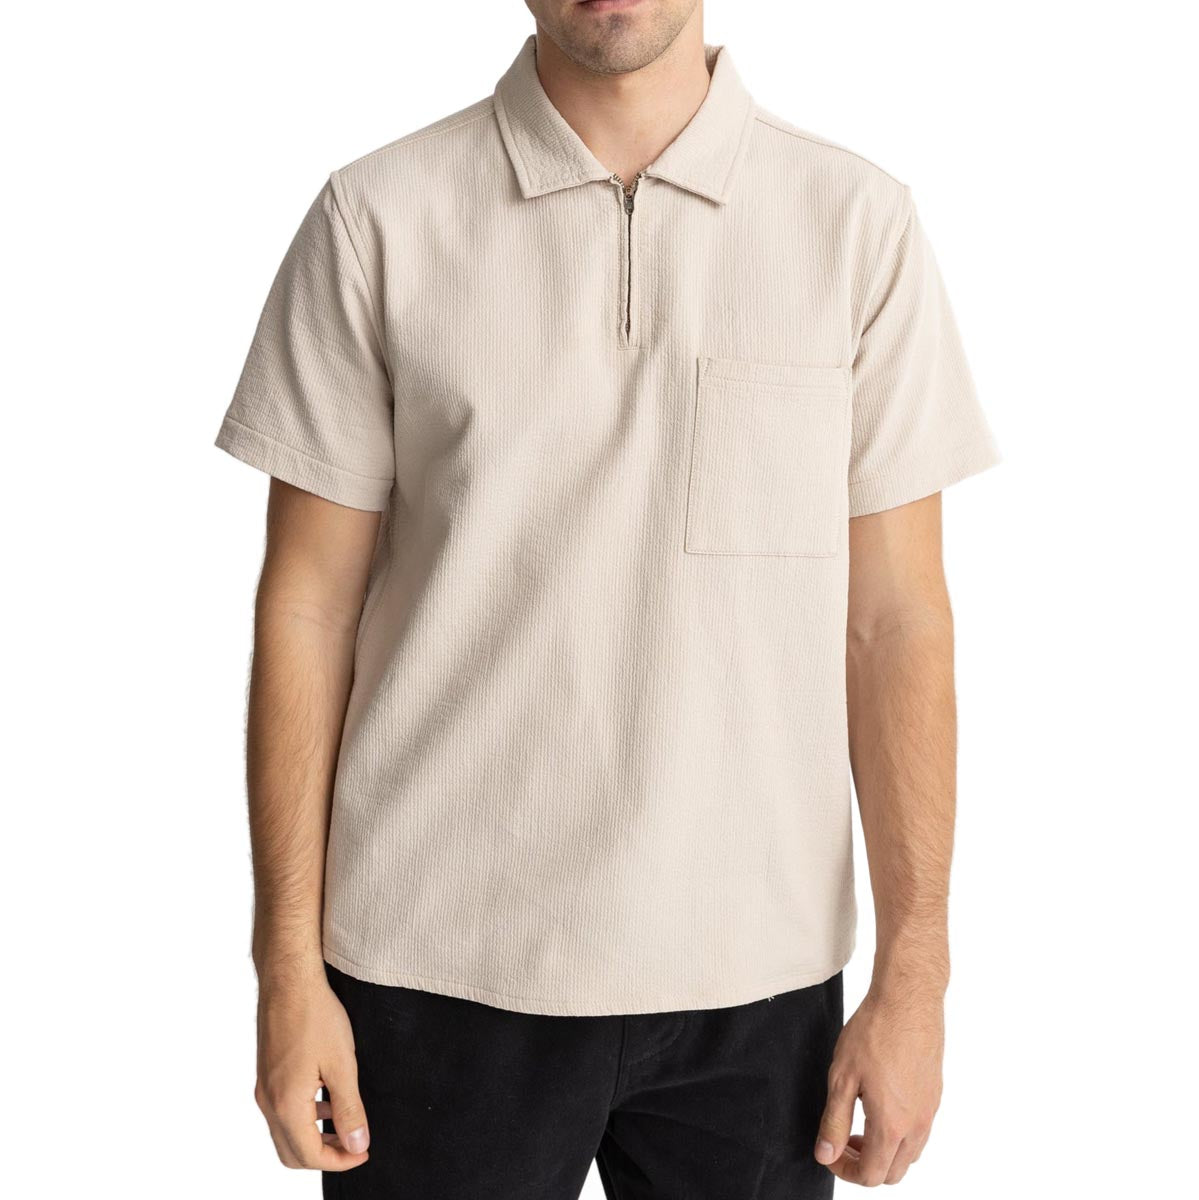 Rhythm Textured Quarter Zip Shirt - Sand image 1